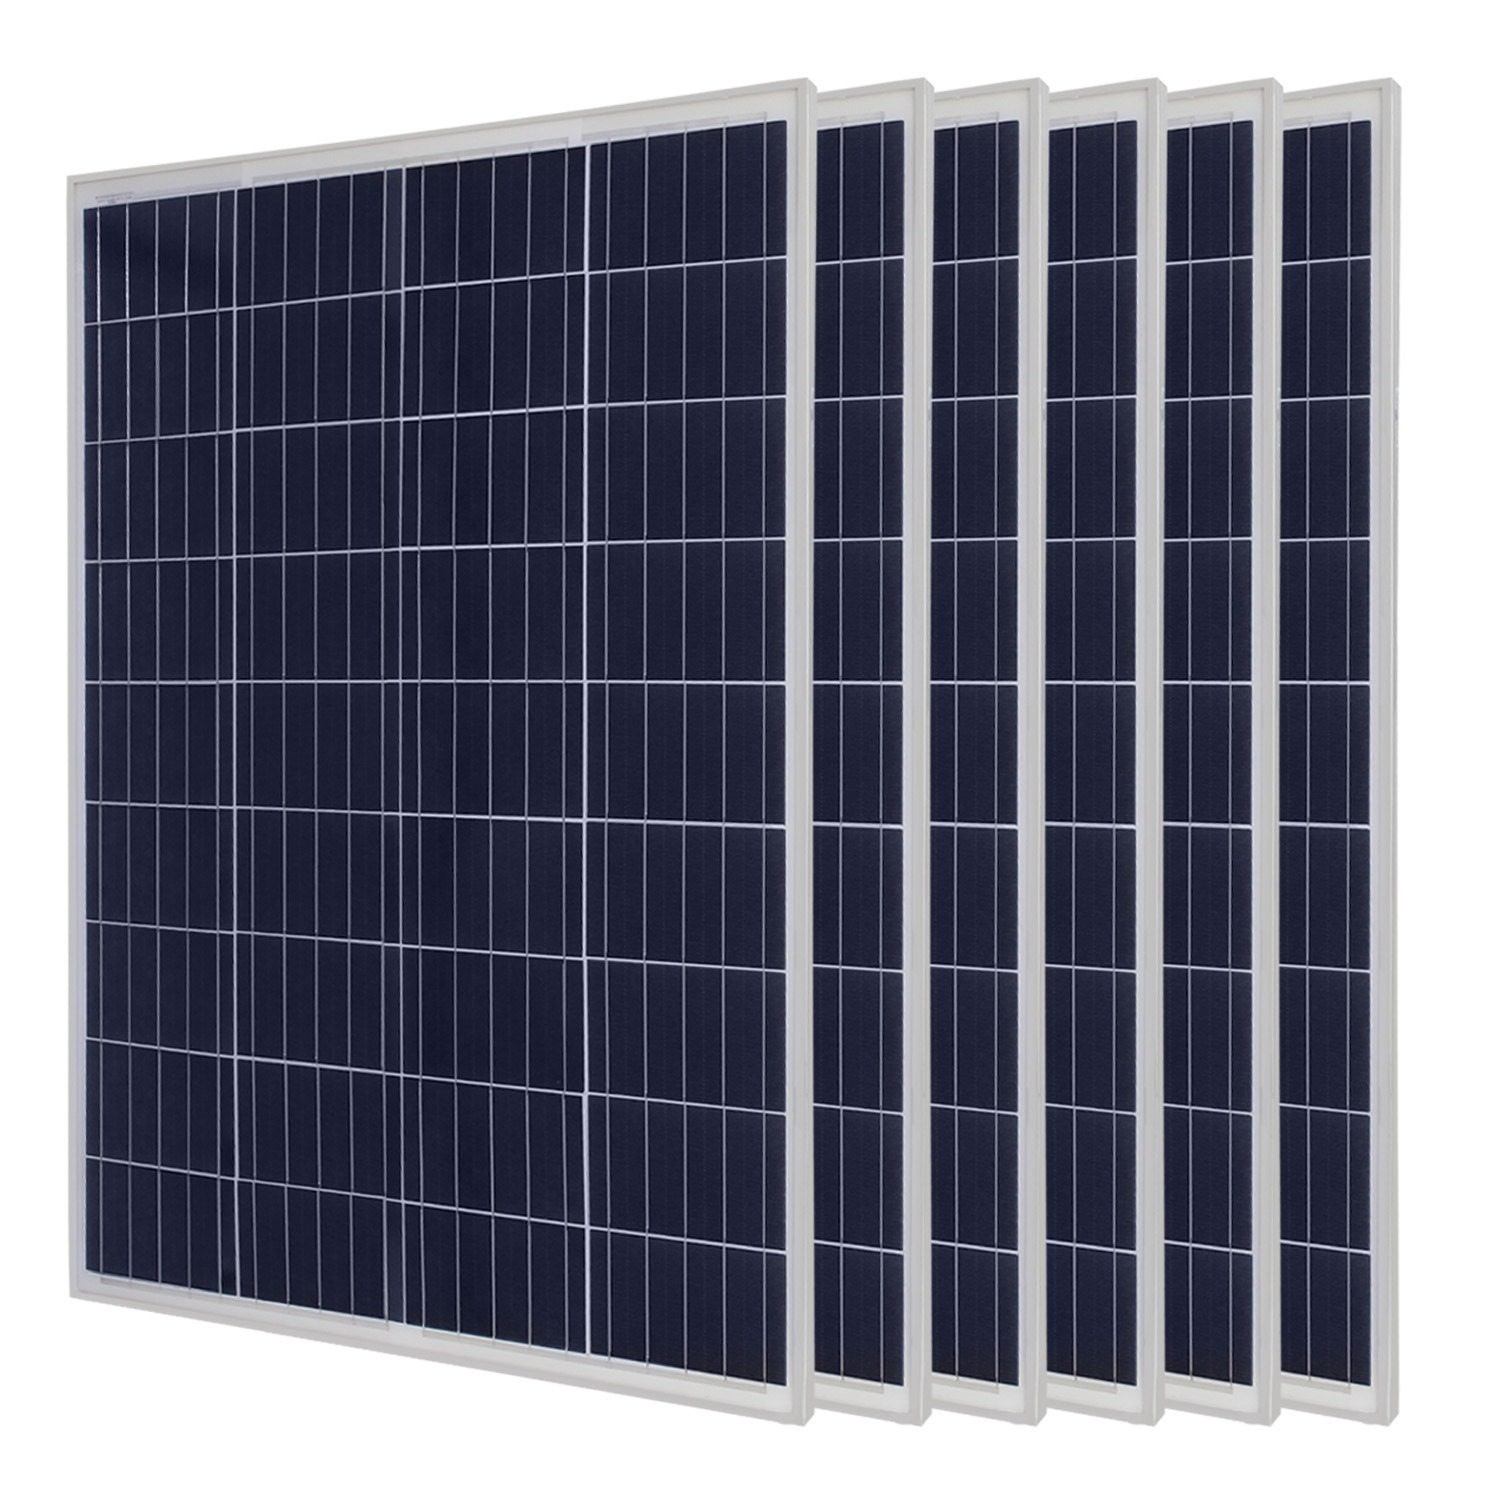 100 Watt 12 Volt Waterproof Polycrystalline Solar Panel Charger - 6 Pack